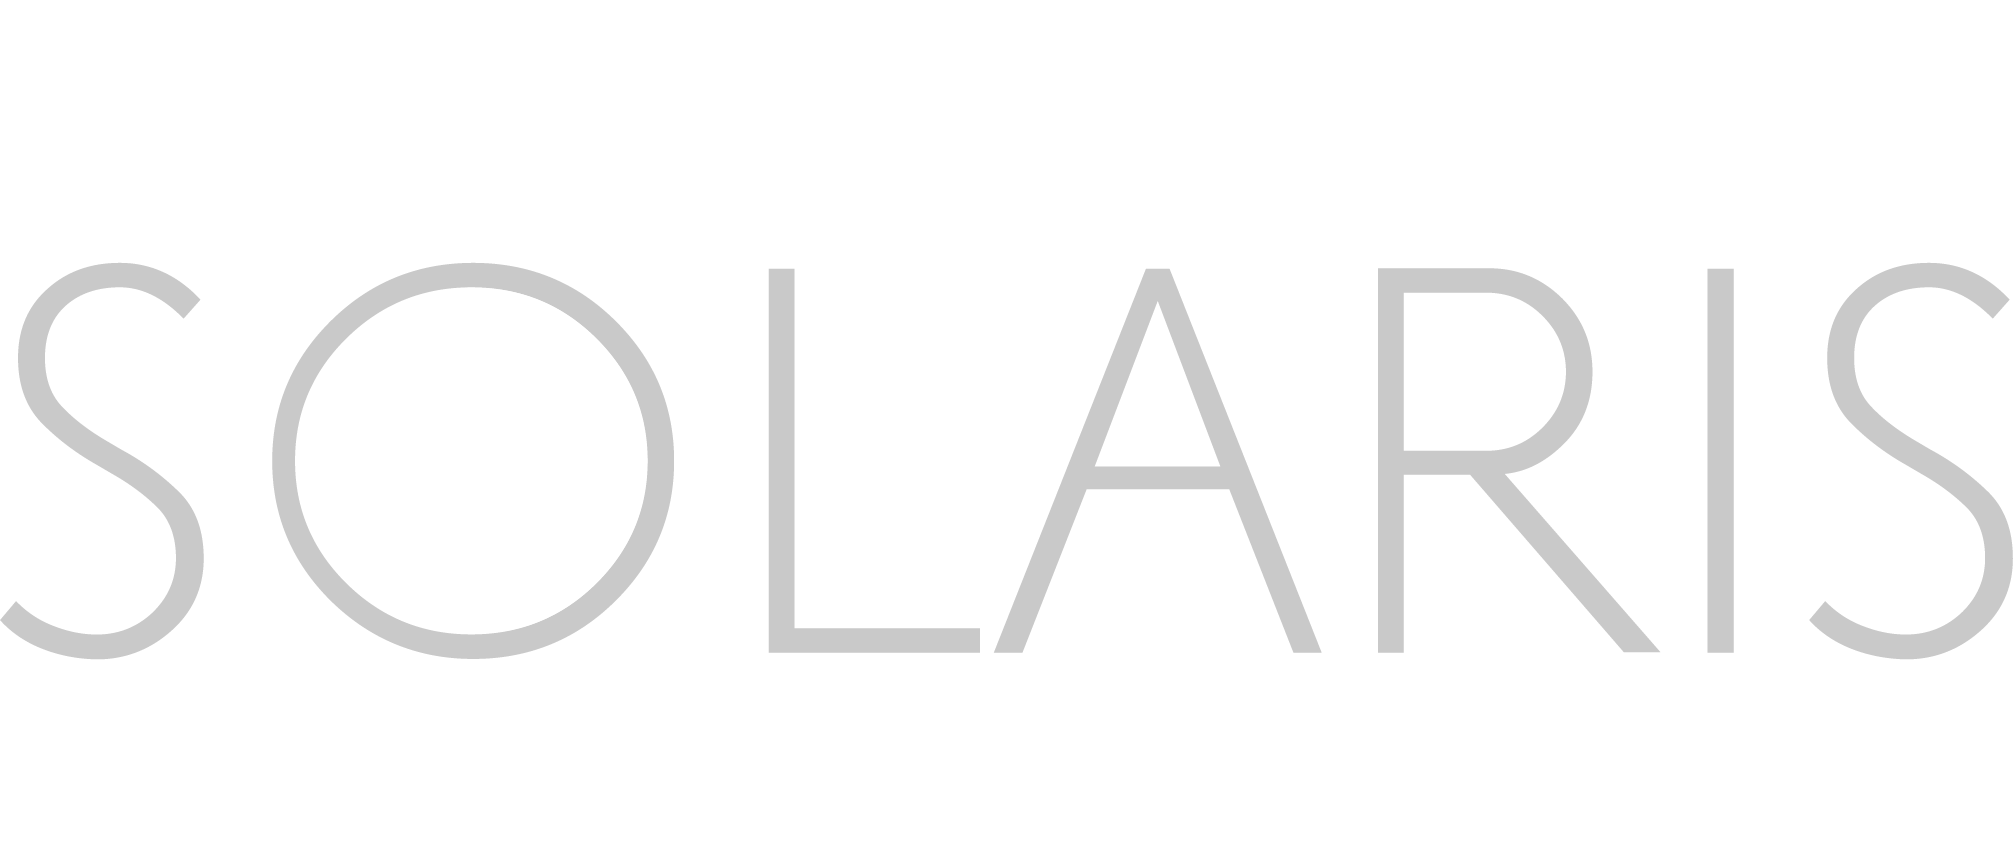 Steel Solaris CL Grupo Industrial